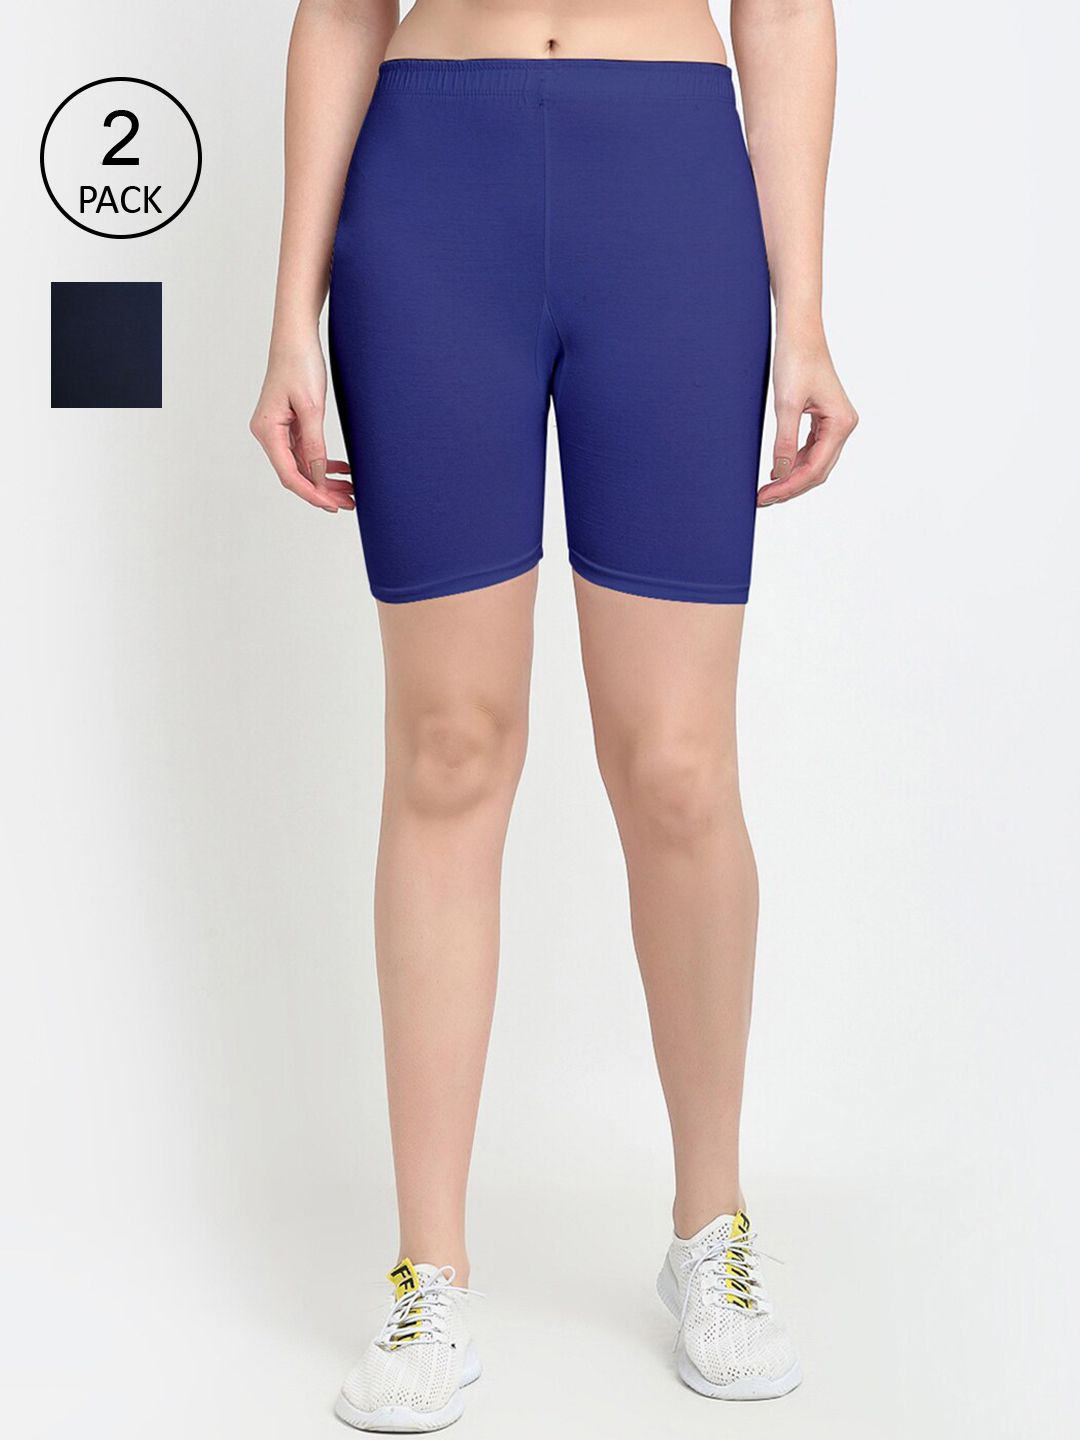 GRACIT Women Blue Pack of 2 Biker Shorts Price in India